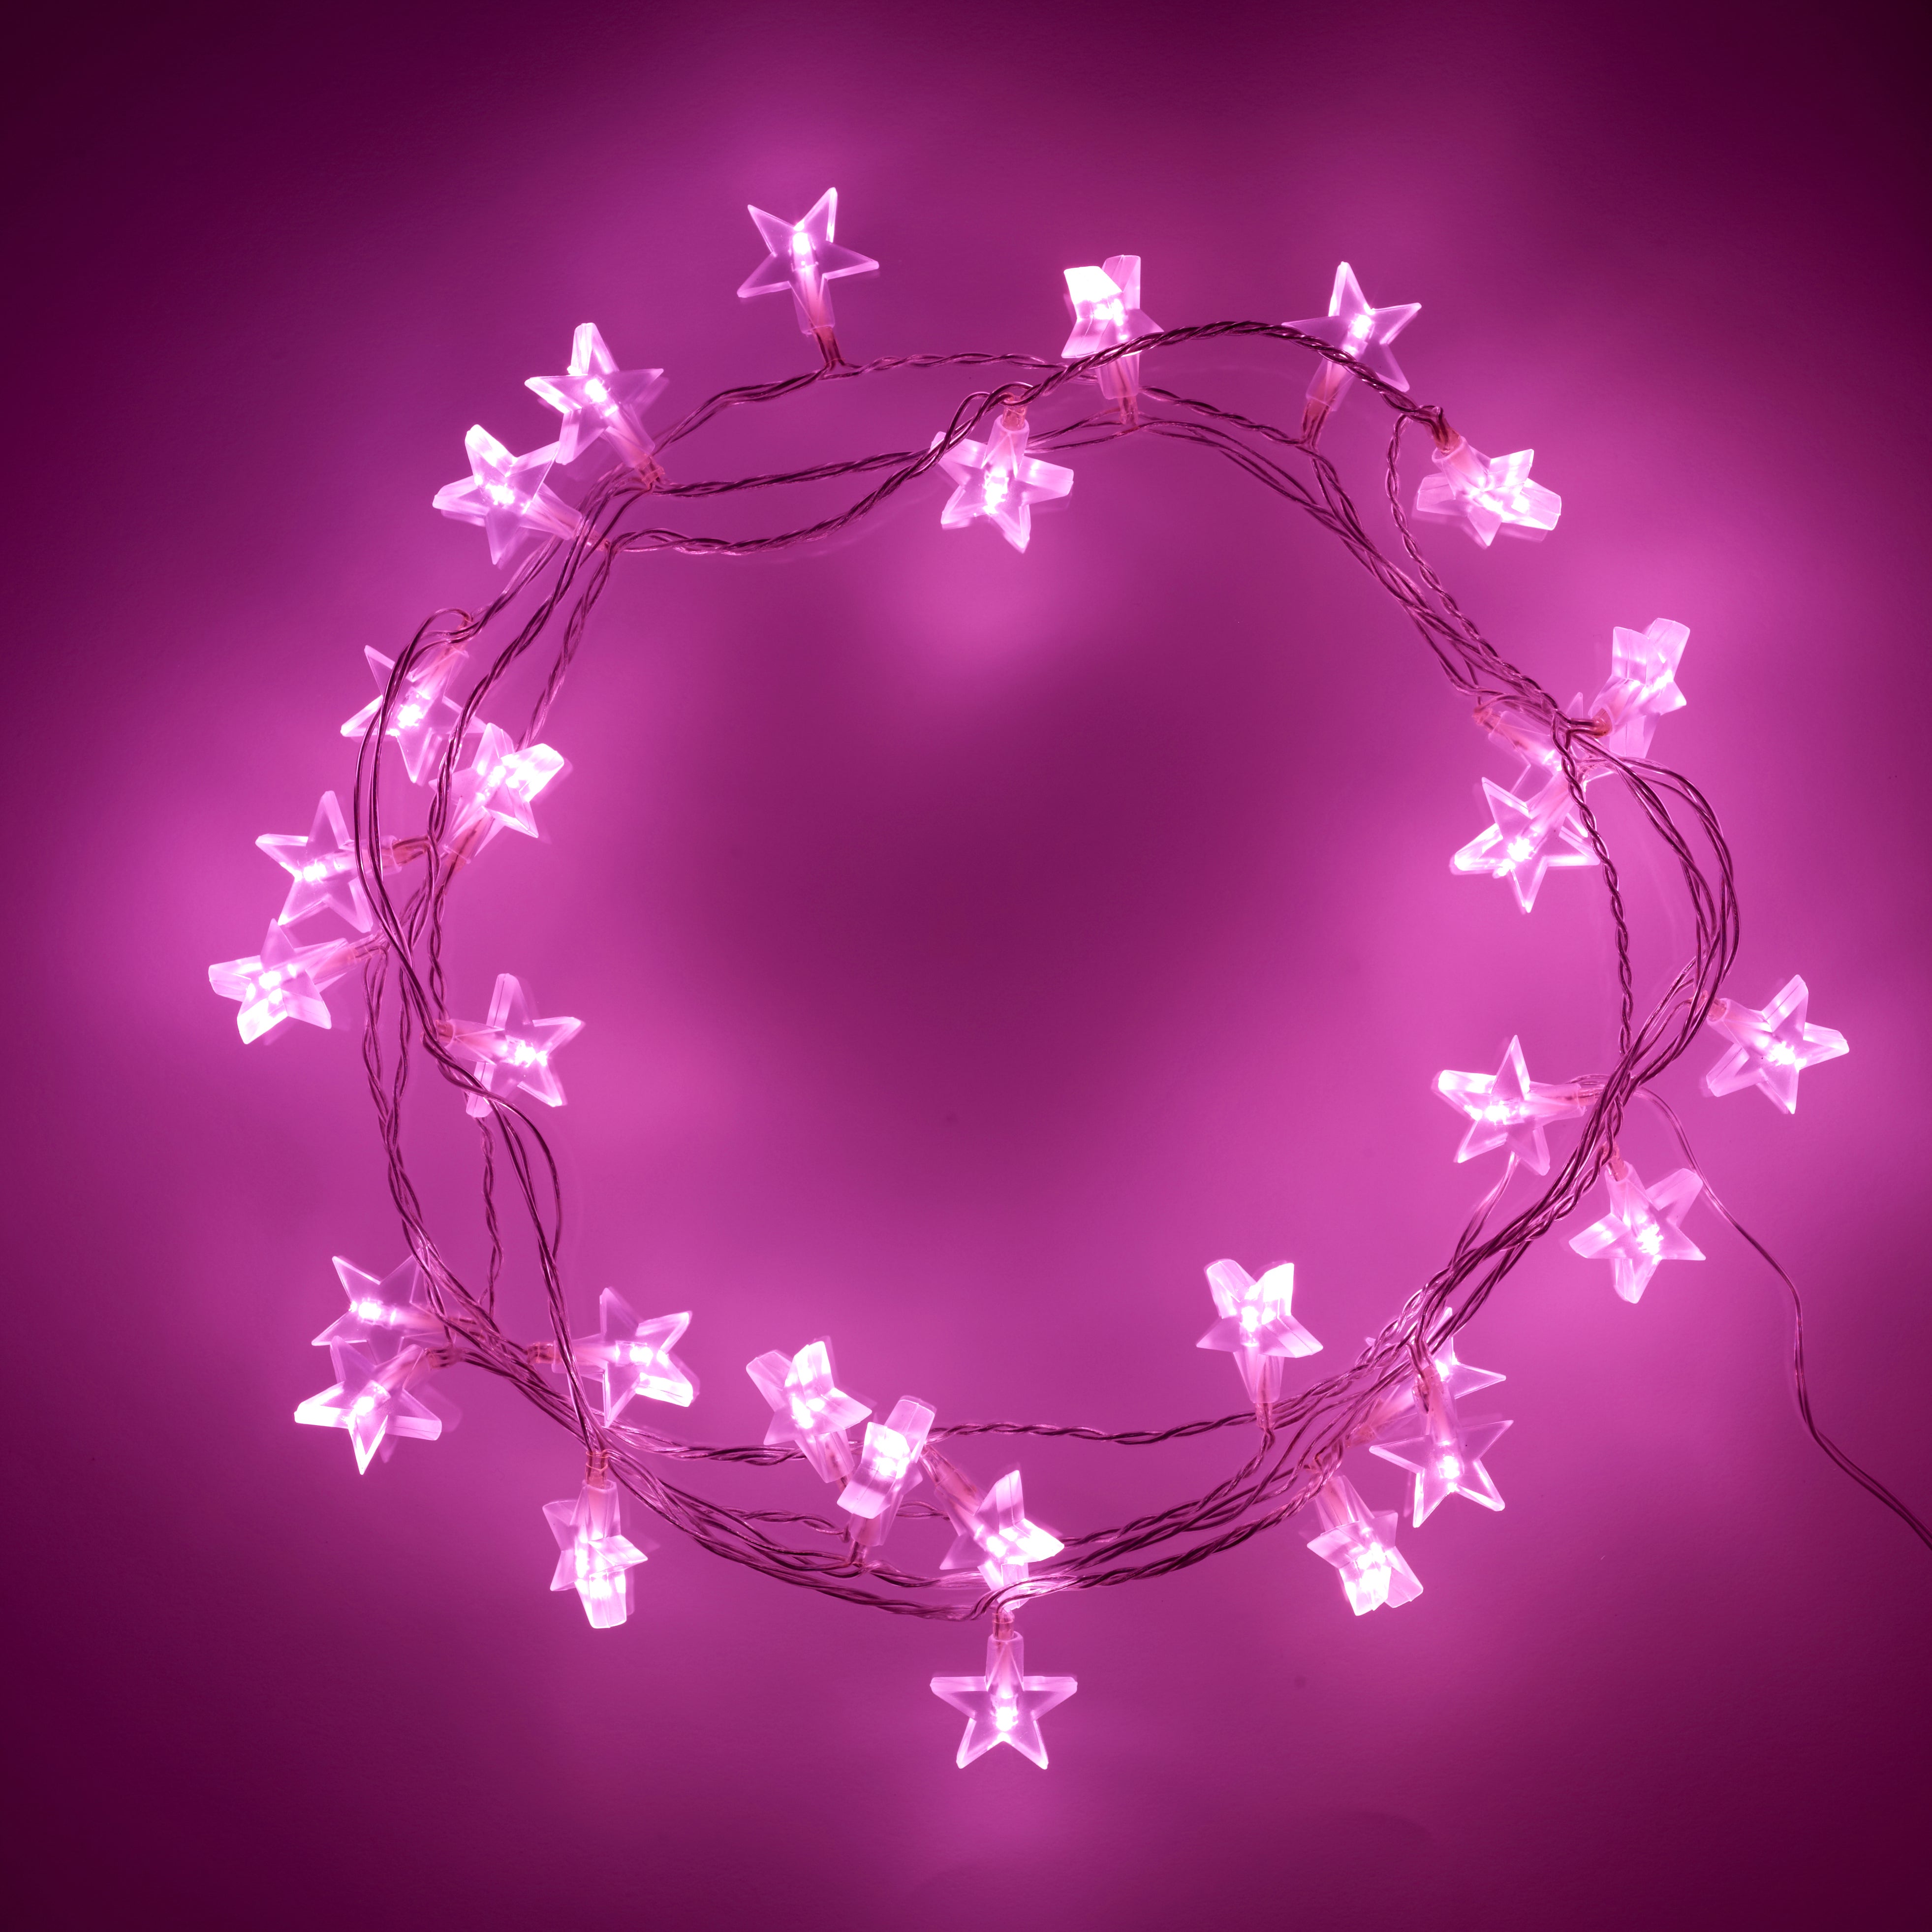 Cergrey Guirlande Lumineuse Rose Rouge Fleur LED Lampe Extensible